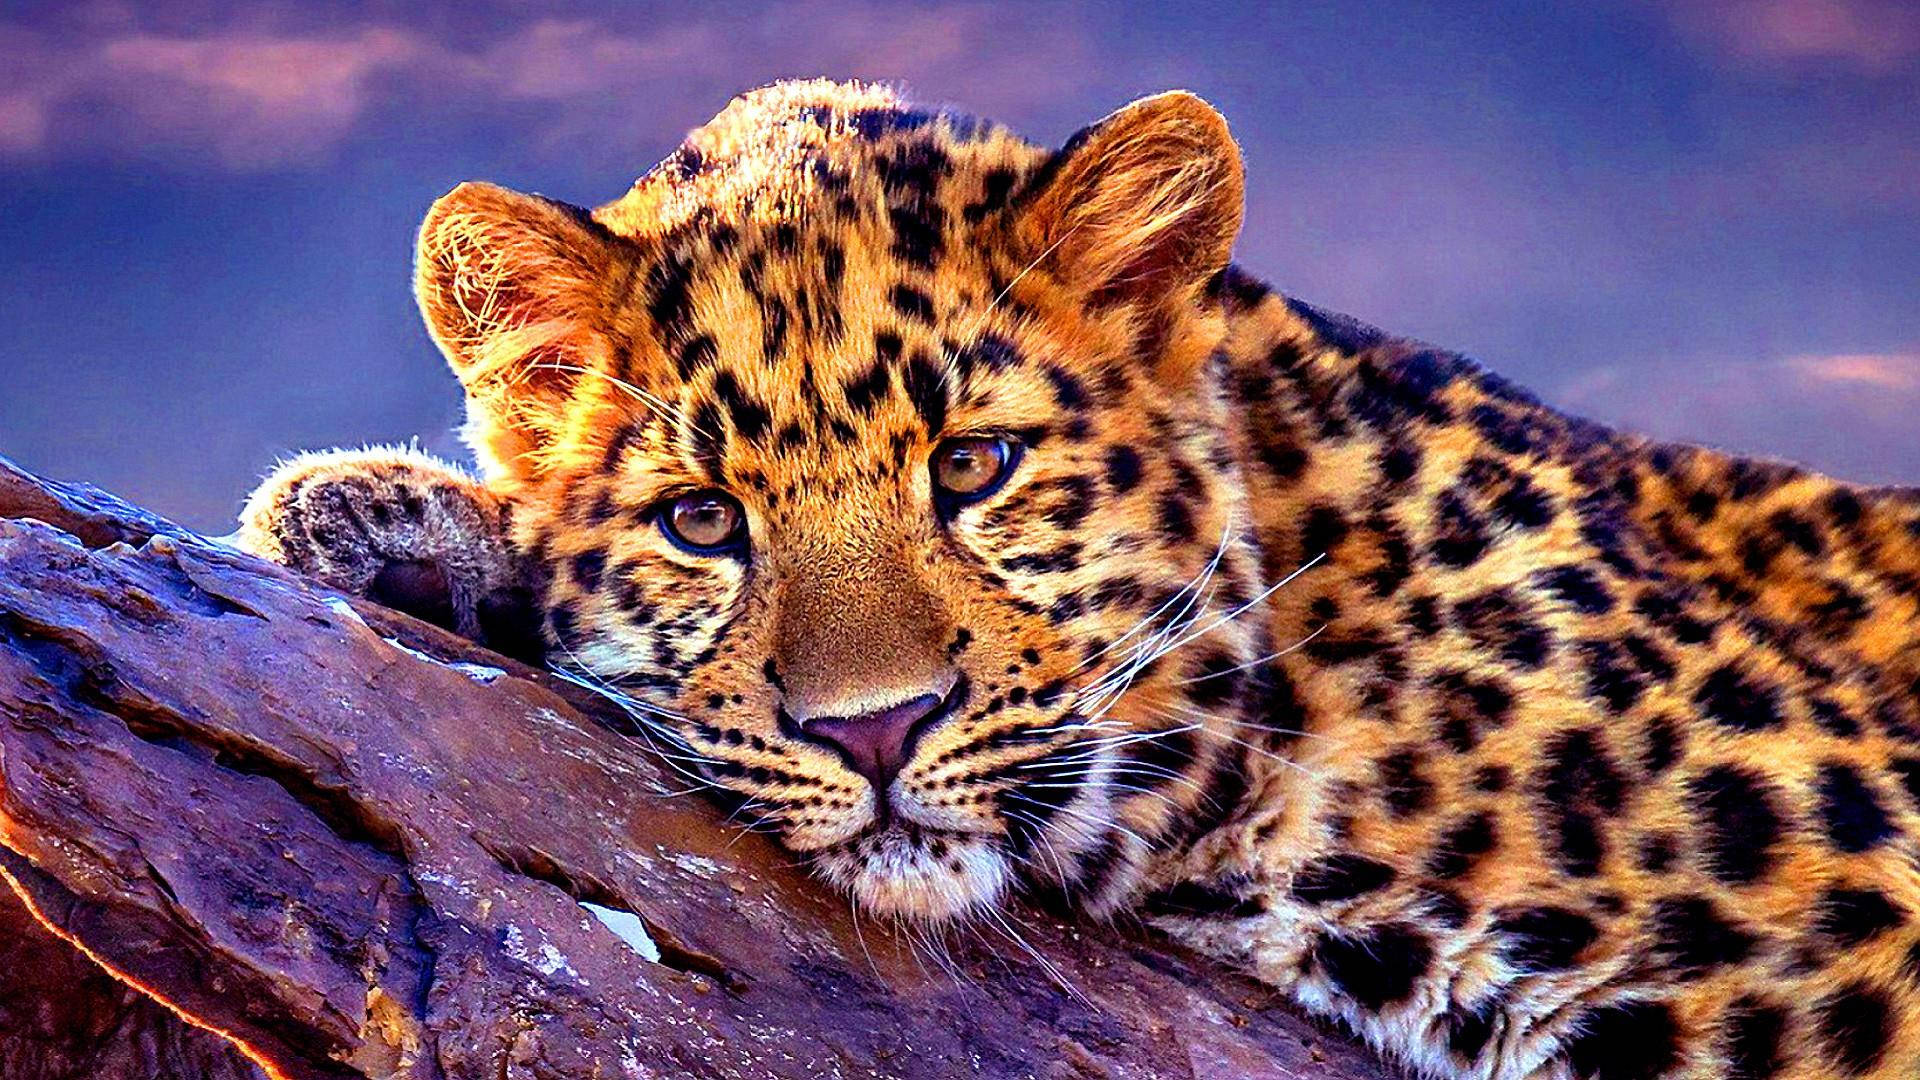 Leopard Wallpaper Images